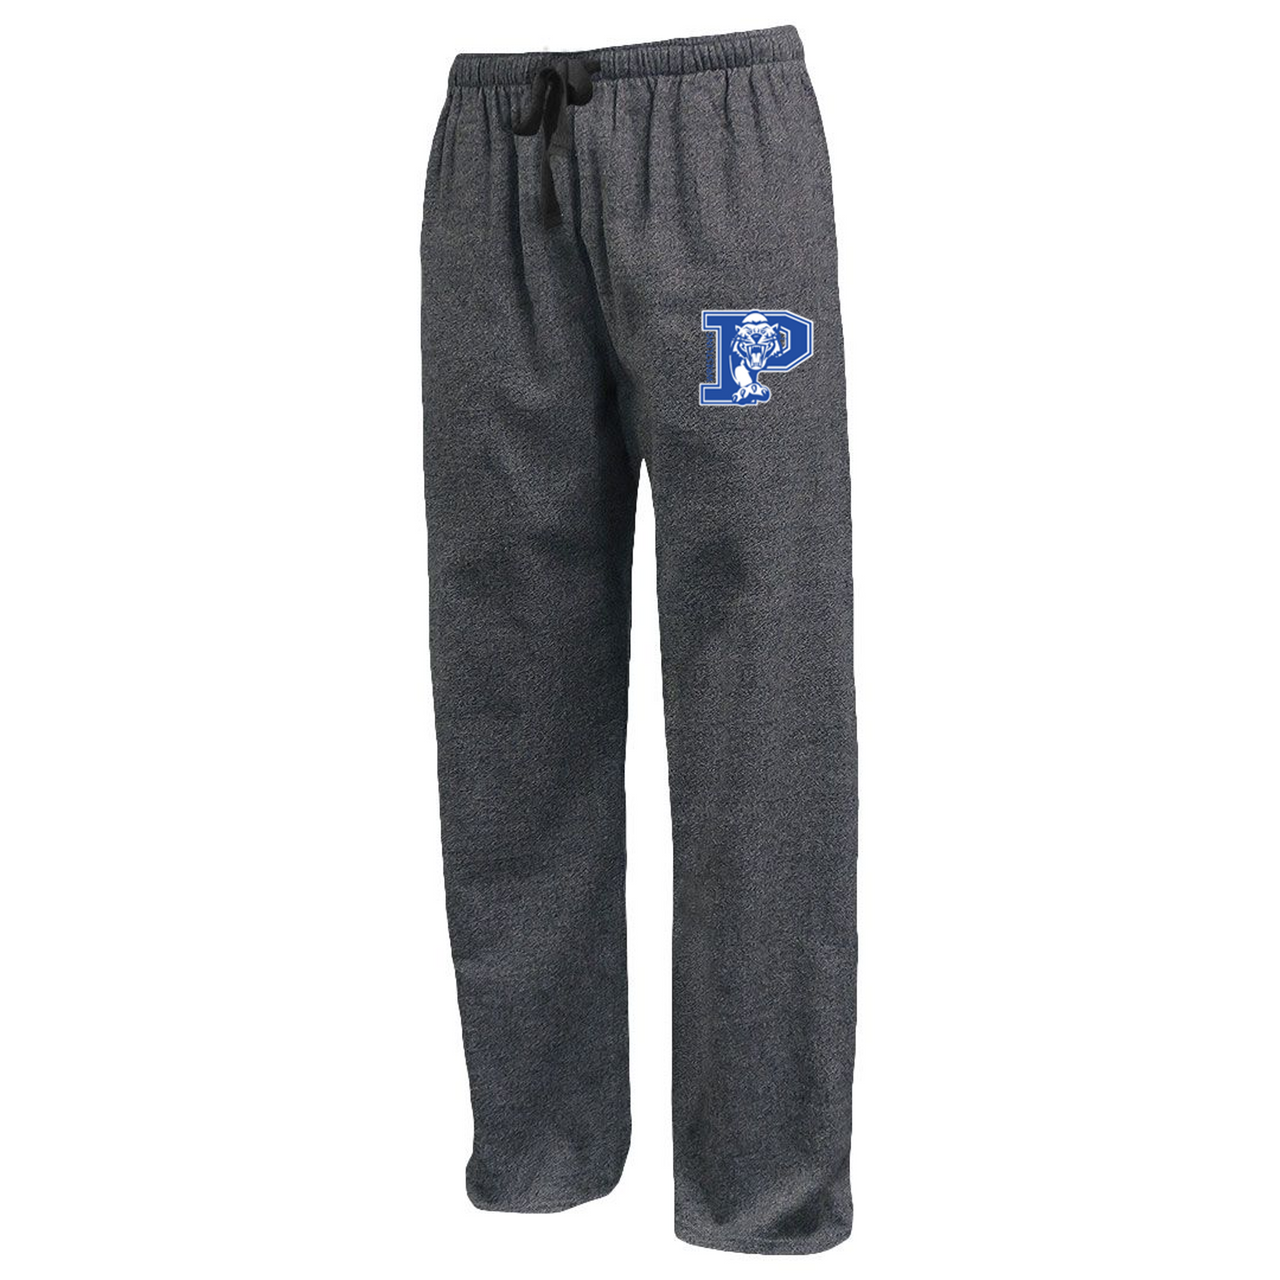 Wrestling flannel pant - Princeton Threads